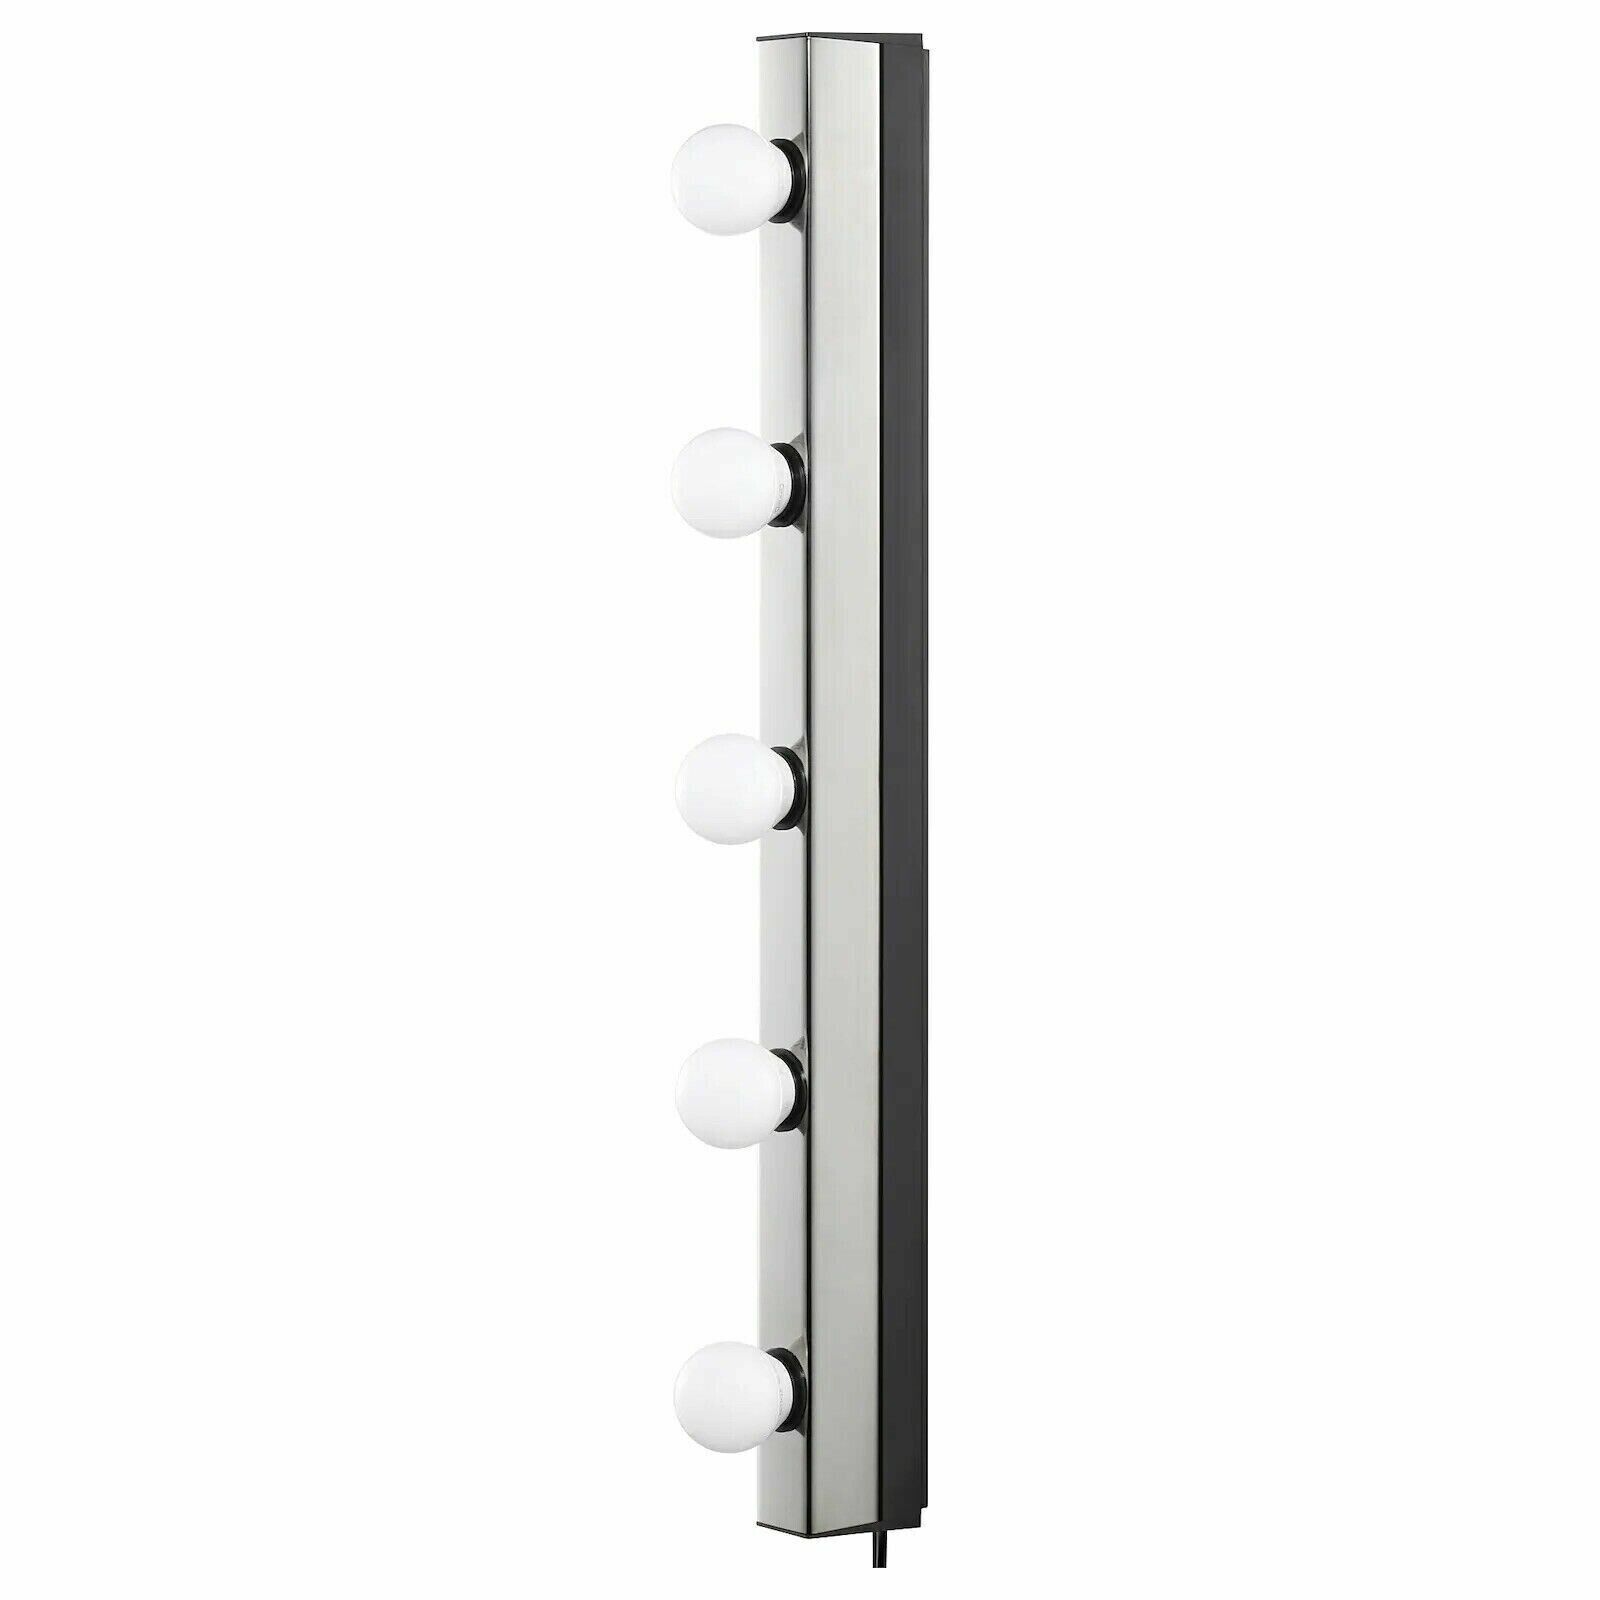 LOT of 2!! MUSIK IKEA wall lamp light strip for mirror or bathroom | eBay